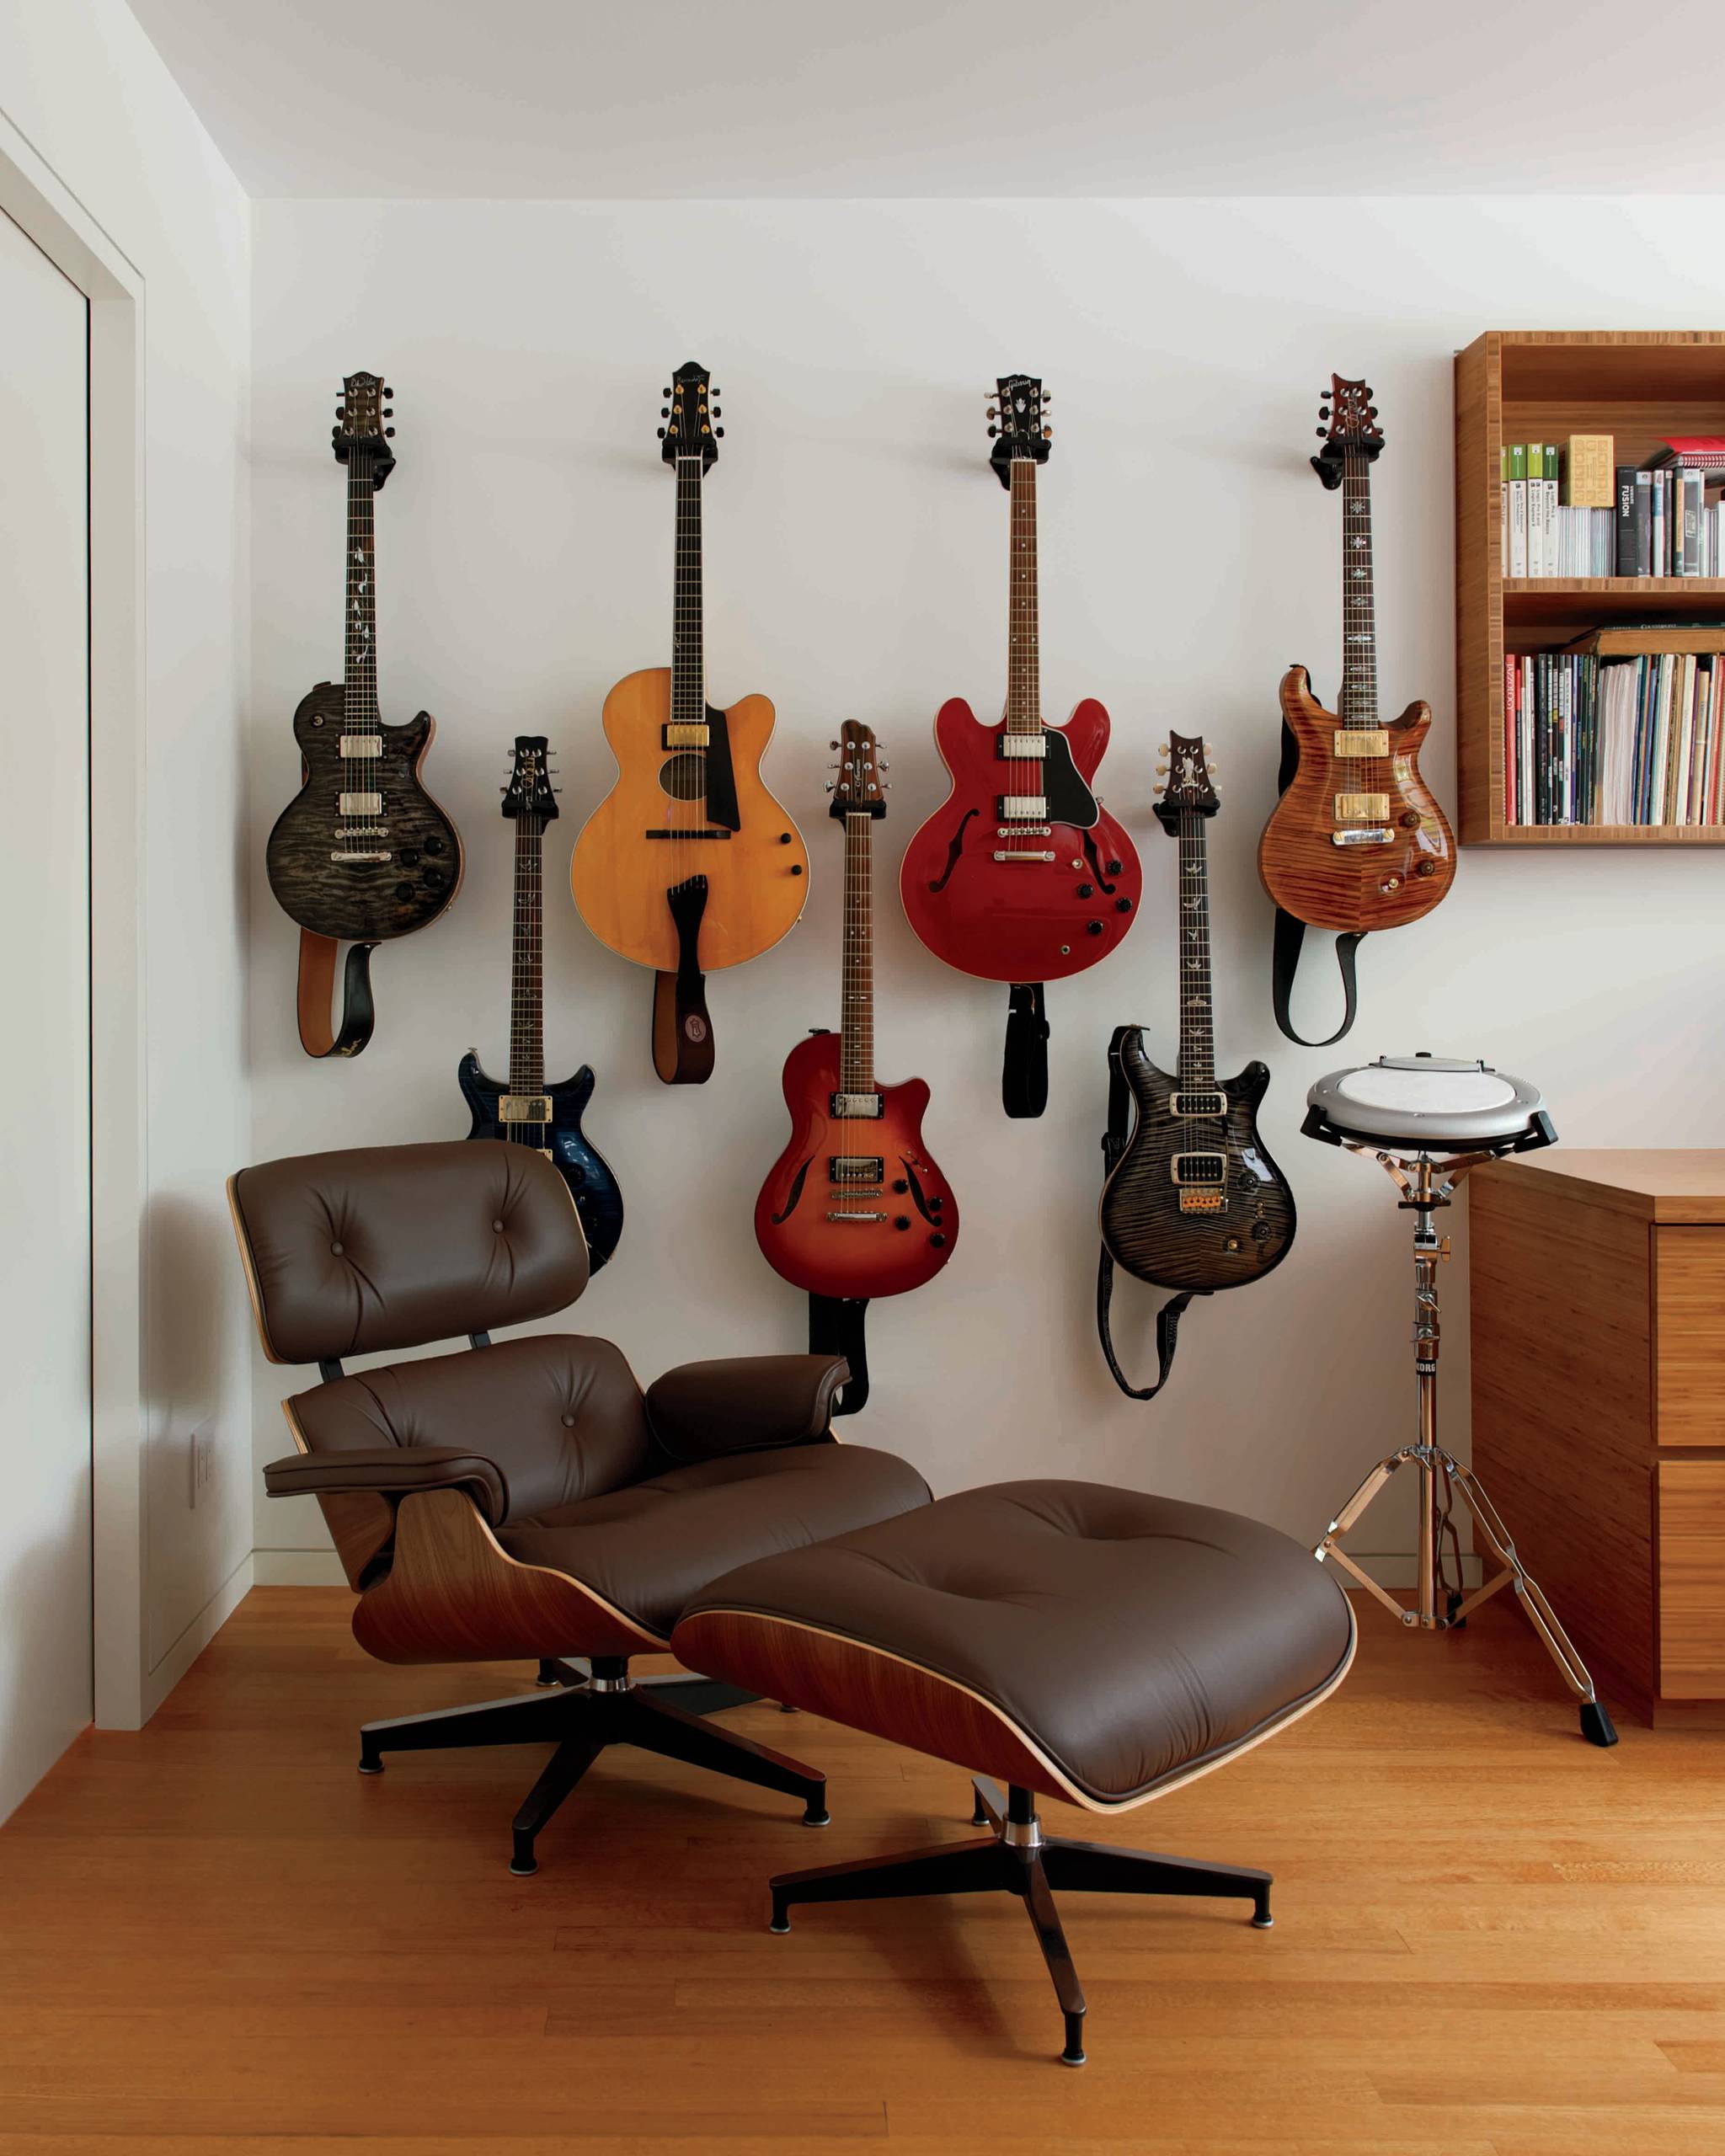 Hanging Guitar - Photos & Ideas | Houzz